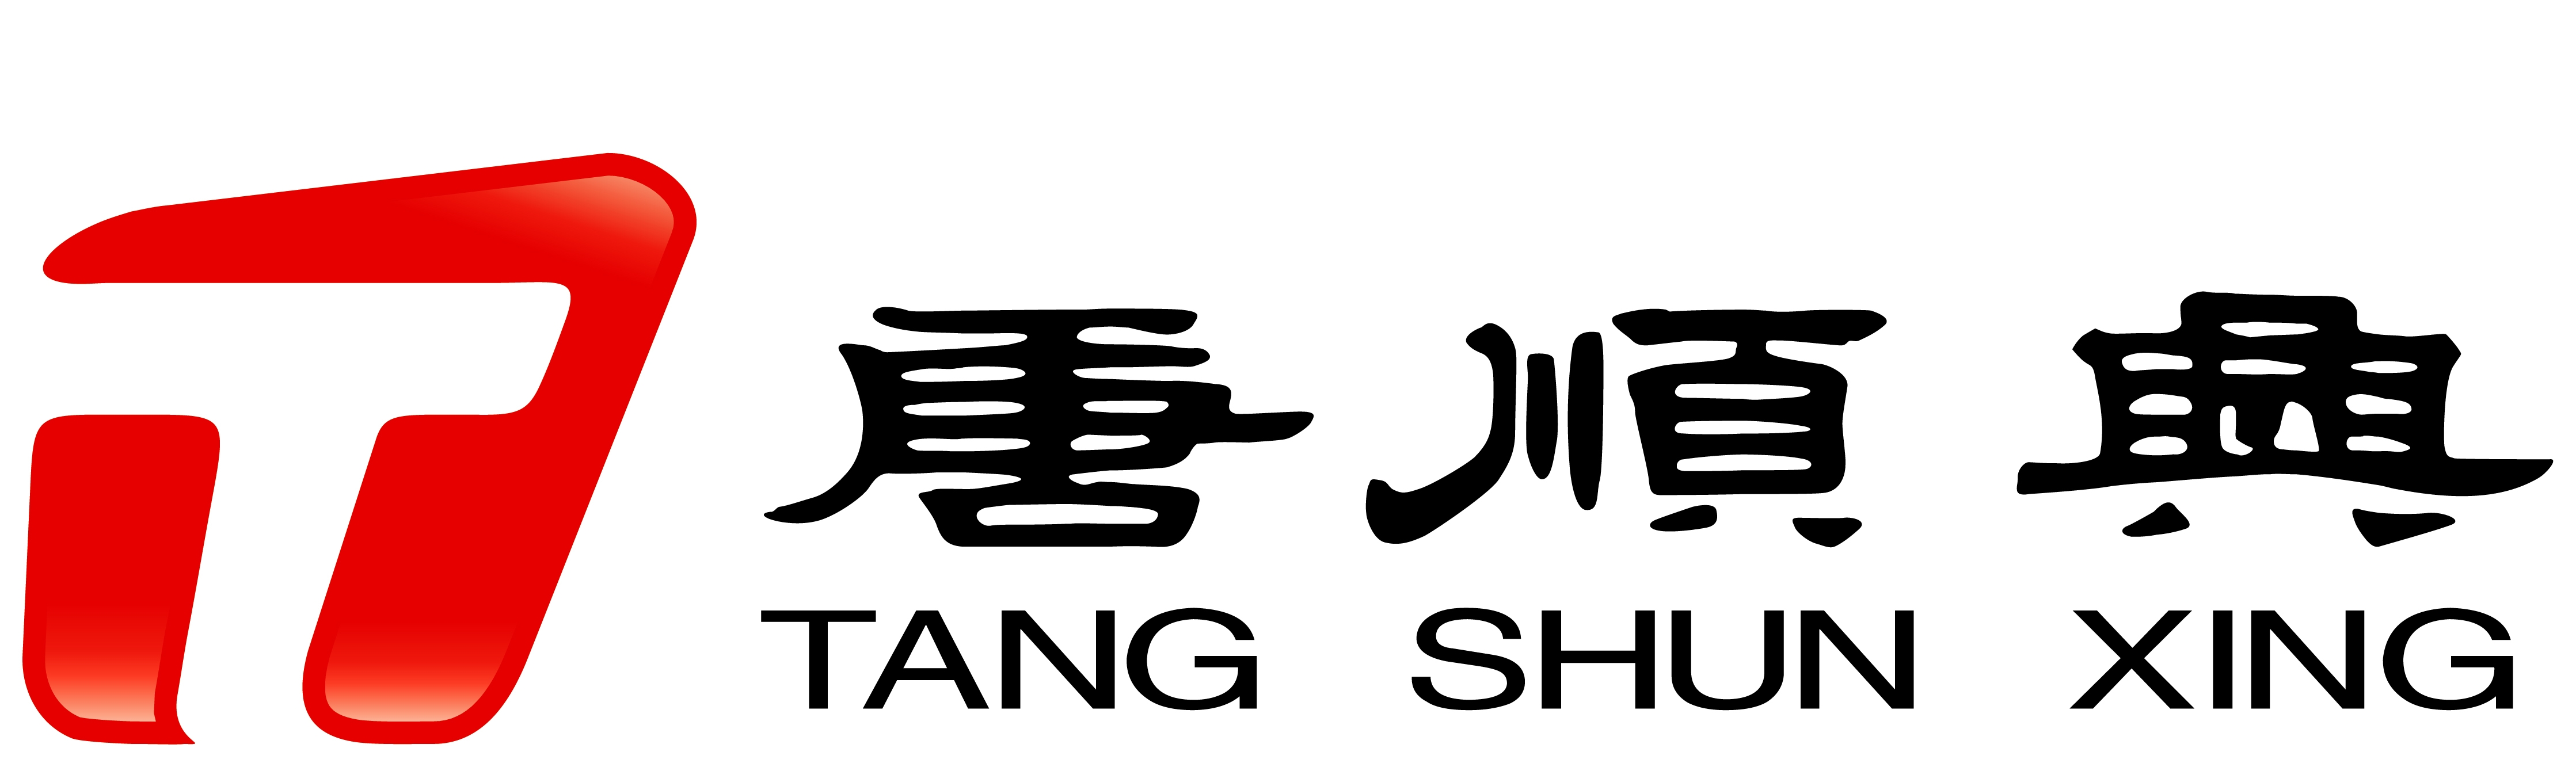 Tong Shun Hing